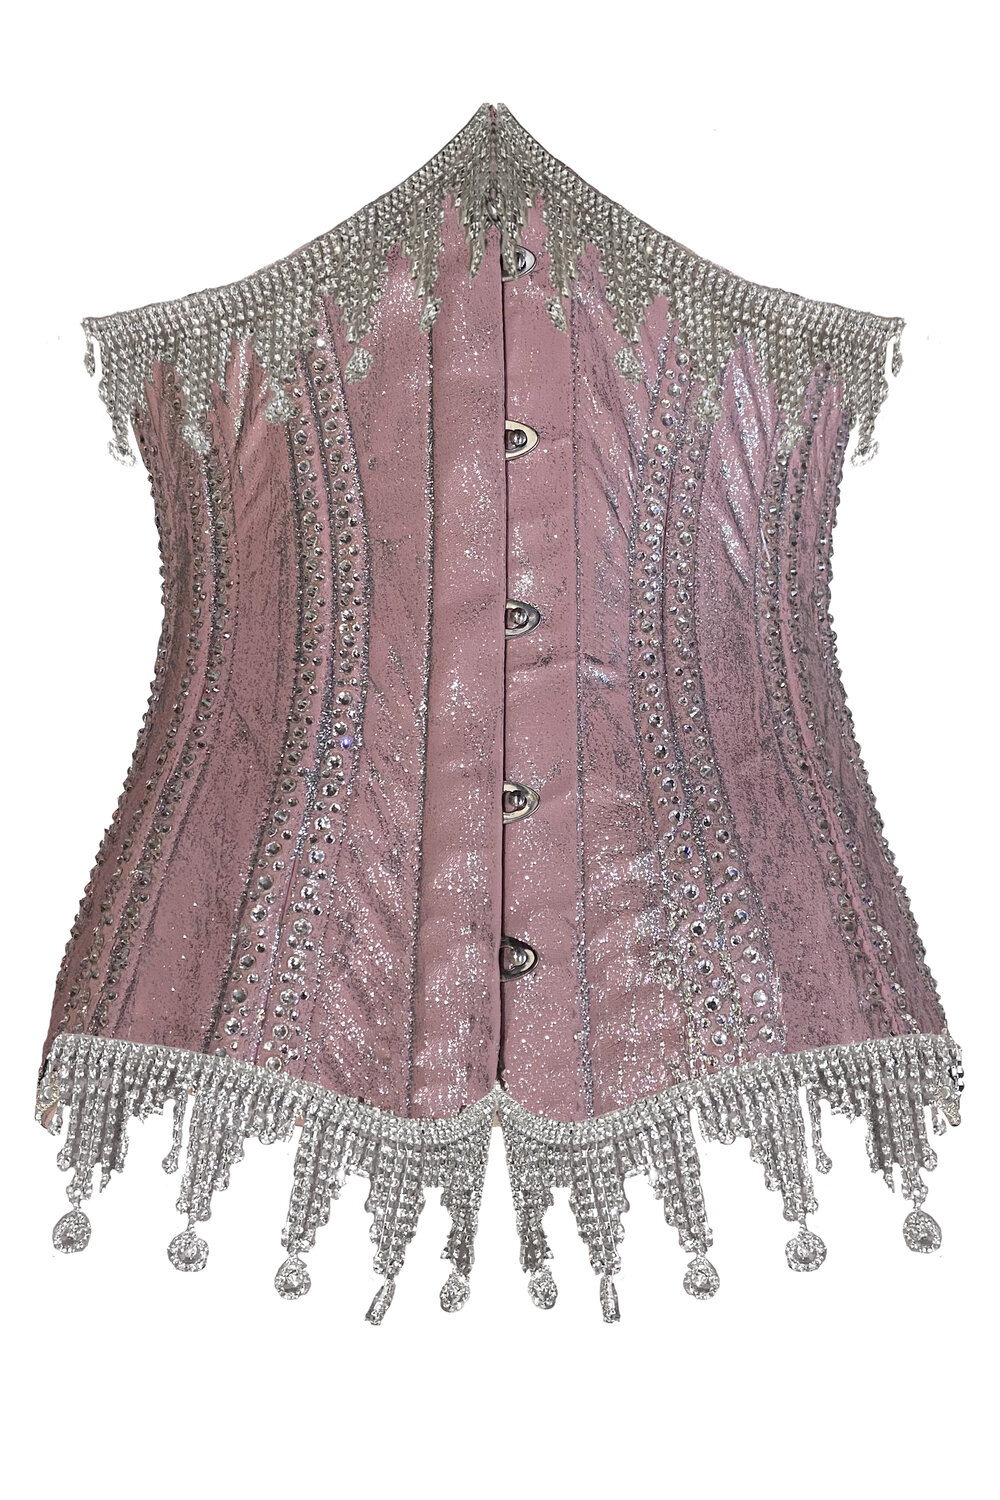 https://images.squarespace-cdn.com/content/v1/55ca2346e4b076270cabfa8a/1596820442517-WE8XRERJ4IEZ2H7OSIVZ/pink+glitter+rhinestone+corset.jpg?format=1000w